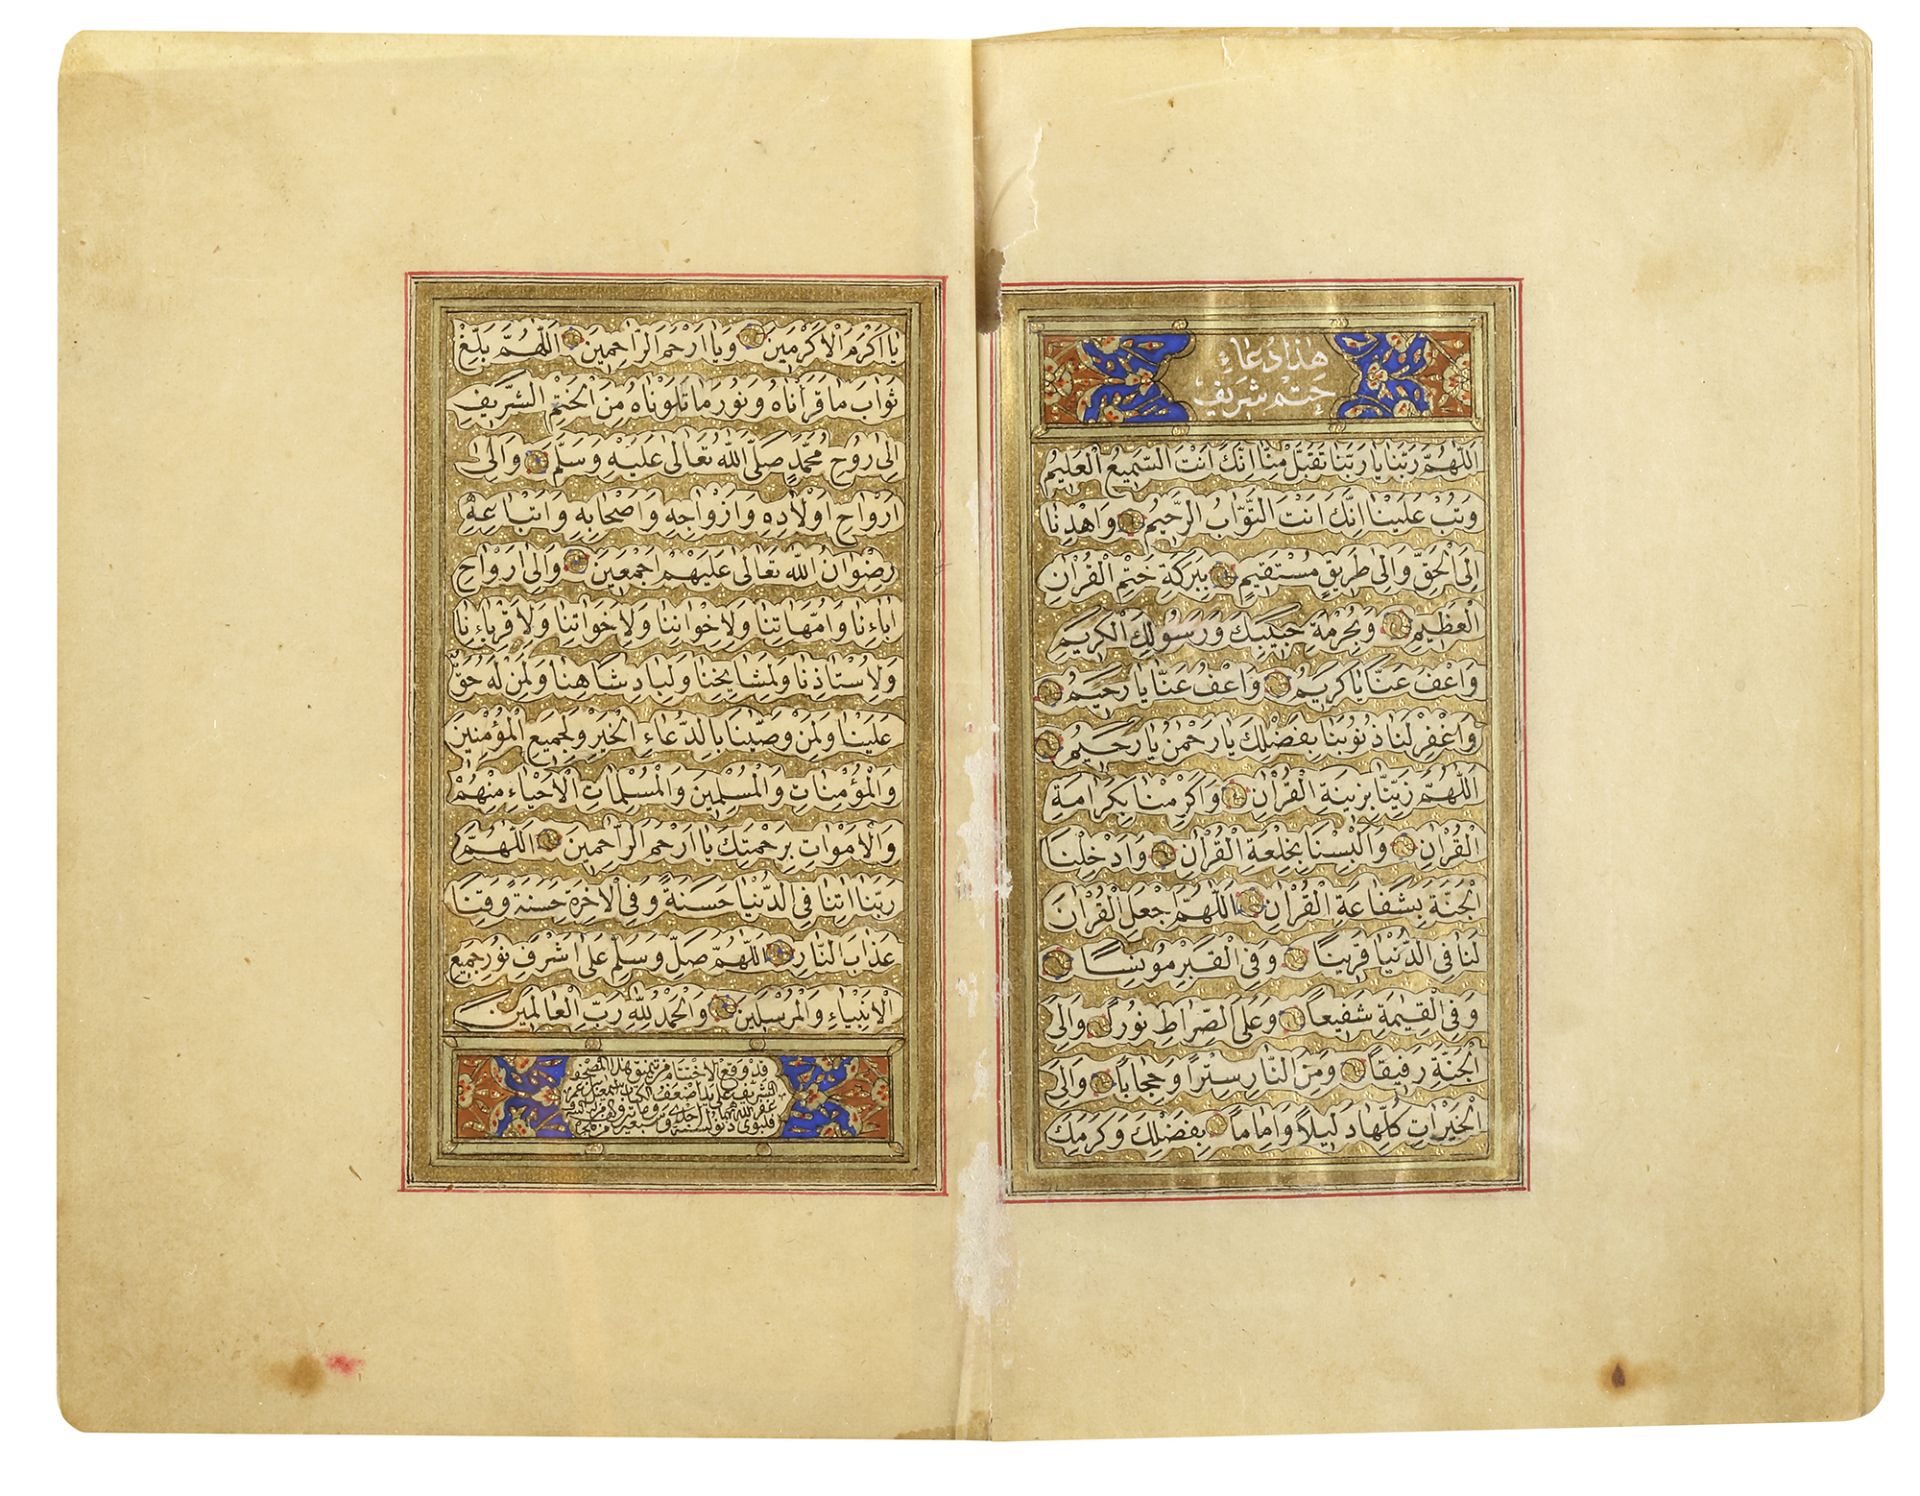 AN ILLUMINATED QURAN COPIED BY ISMA'IL BIN 'UMAR QALBAWI, OTTOMAN PROVINCIAL, DATED 1171 AH/1757-58 - Image 2 of 5